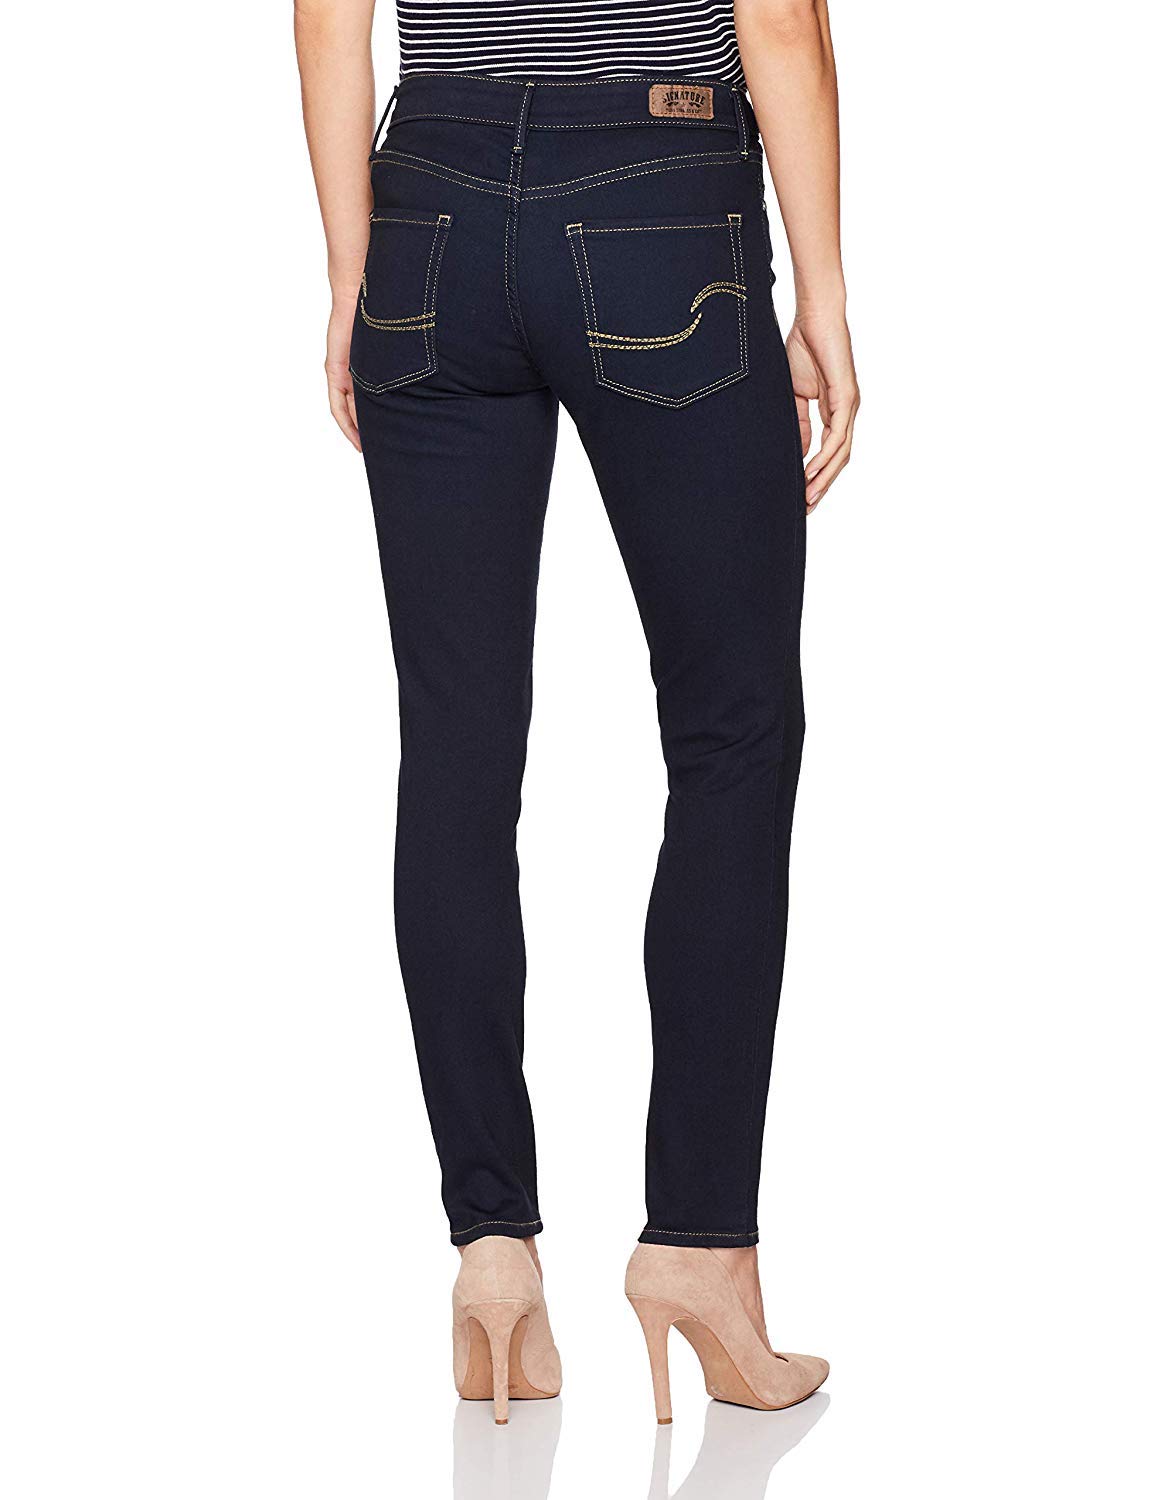 Women's Modern Skinny Jeans (Standard and Plus)